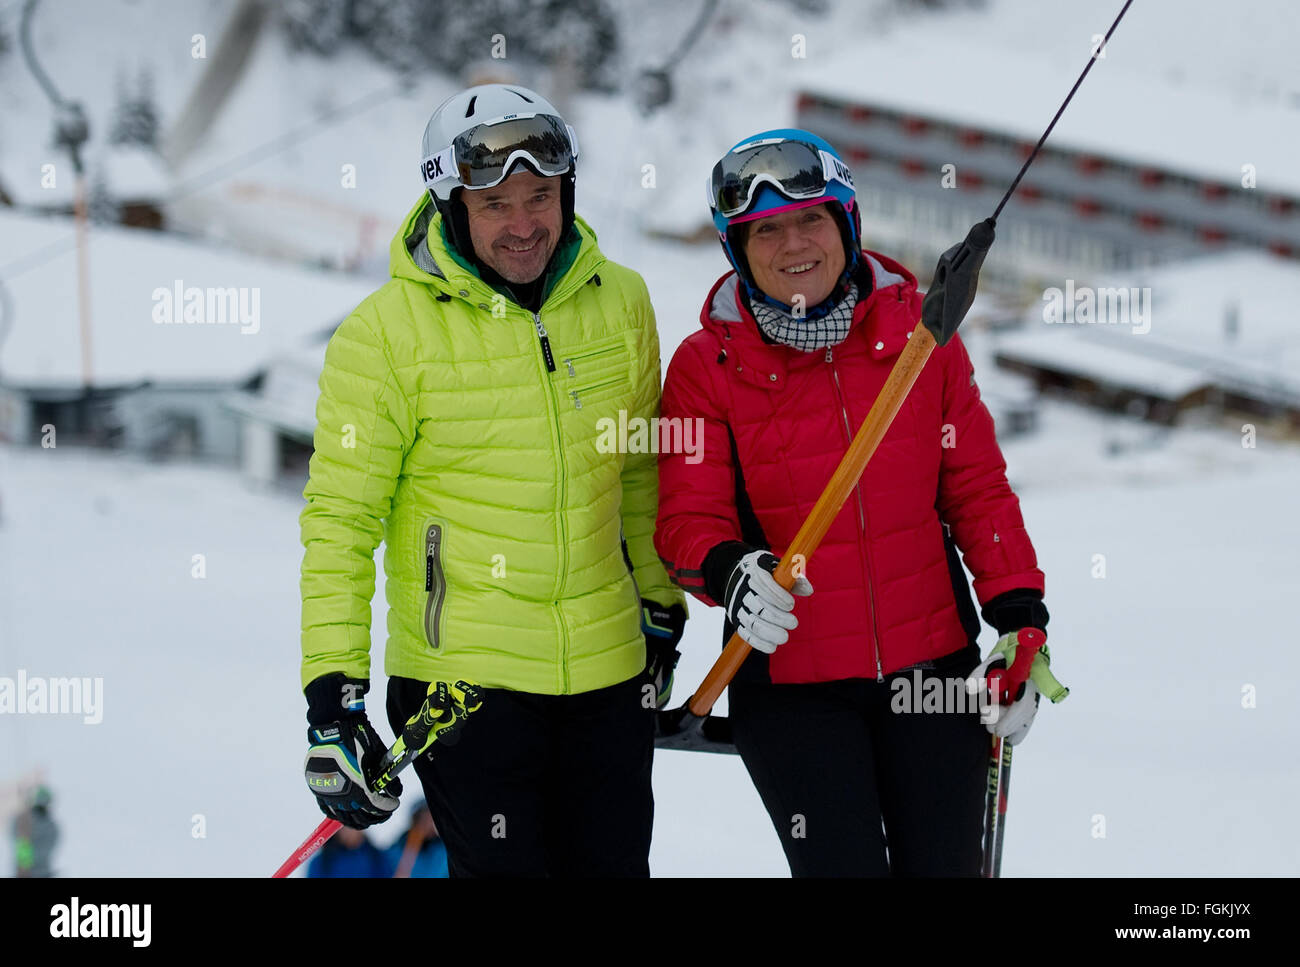 Axamer Lizum, Austria. 14th Jan, 2016. Former downhill skiers Christian Neureuther (L) and Rosi Mittermaier pictured in the skiing resort of Axamer Lizum, Austria, 14 January 2016. Photo: Angelika Warmuth/dpa/Alamy Live News Stock Photo